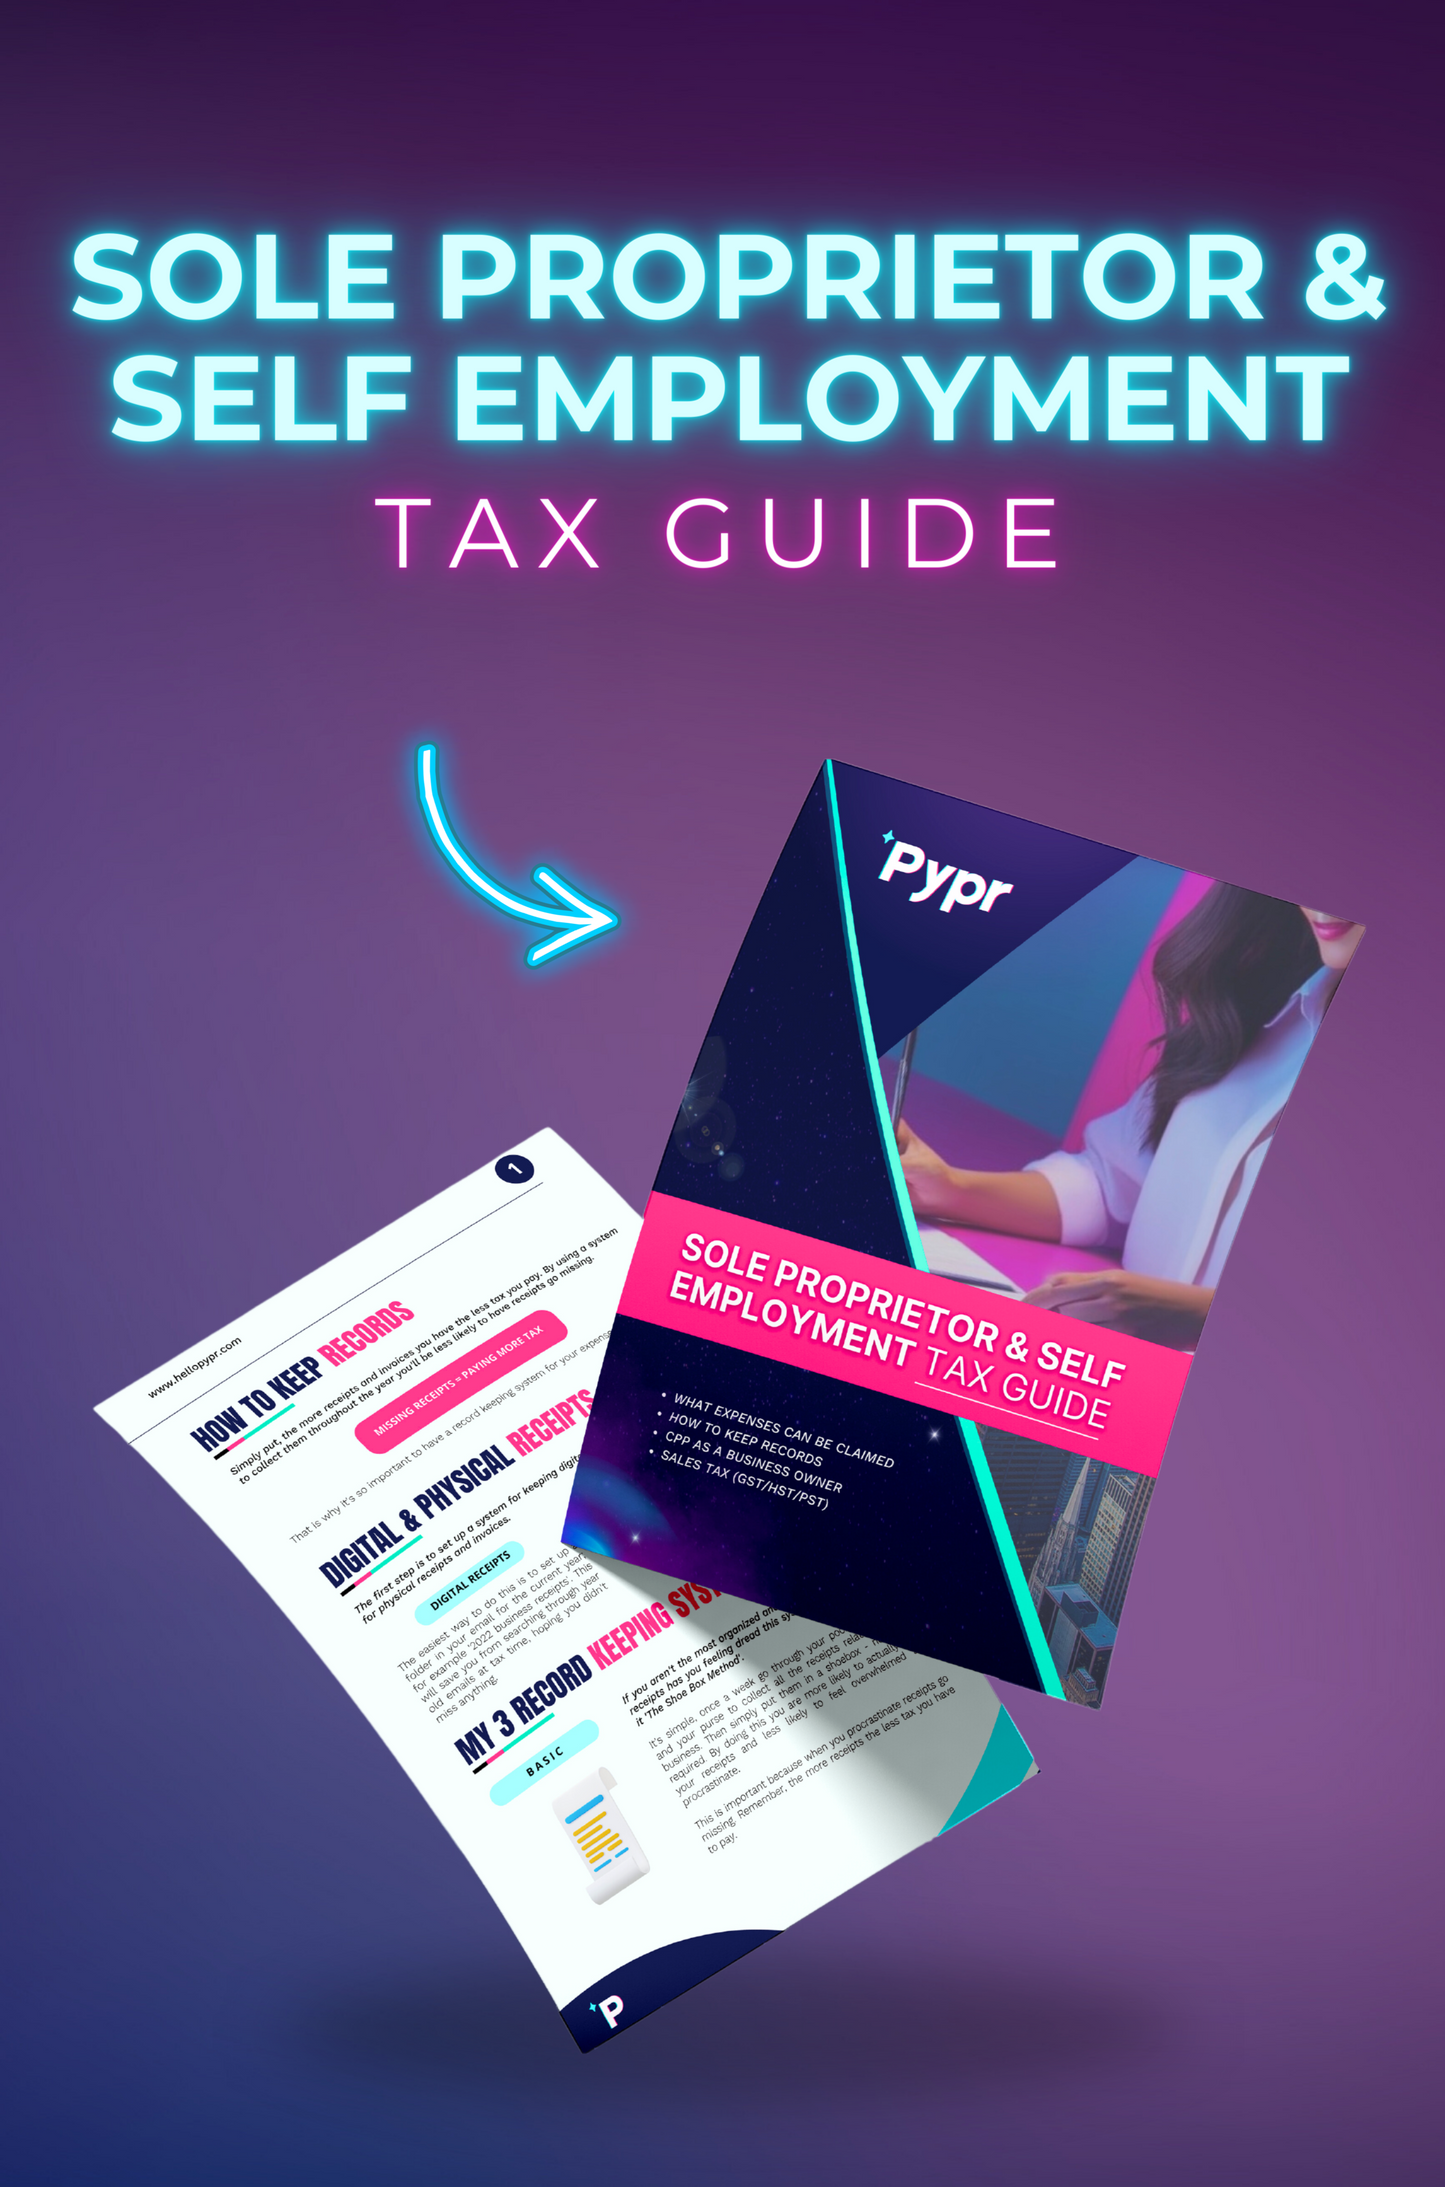 FREE Sole Proprietor & Self Employment Tax Guide!